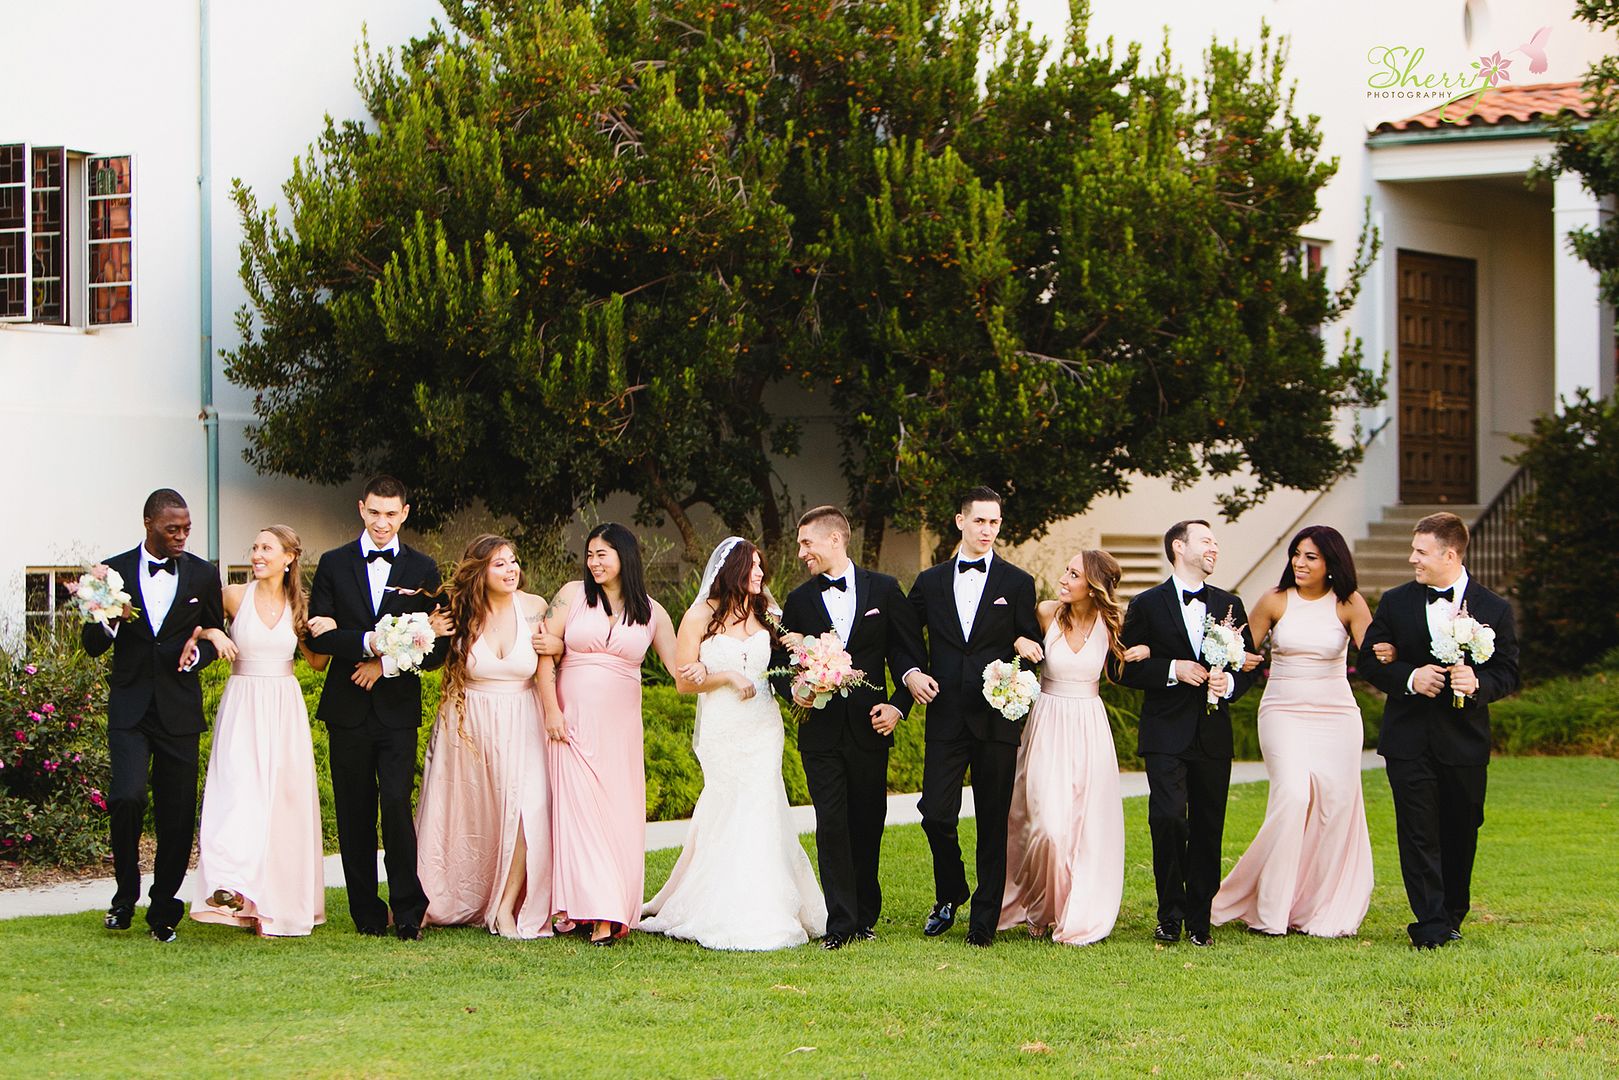 blush and tuxedo wedding attire